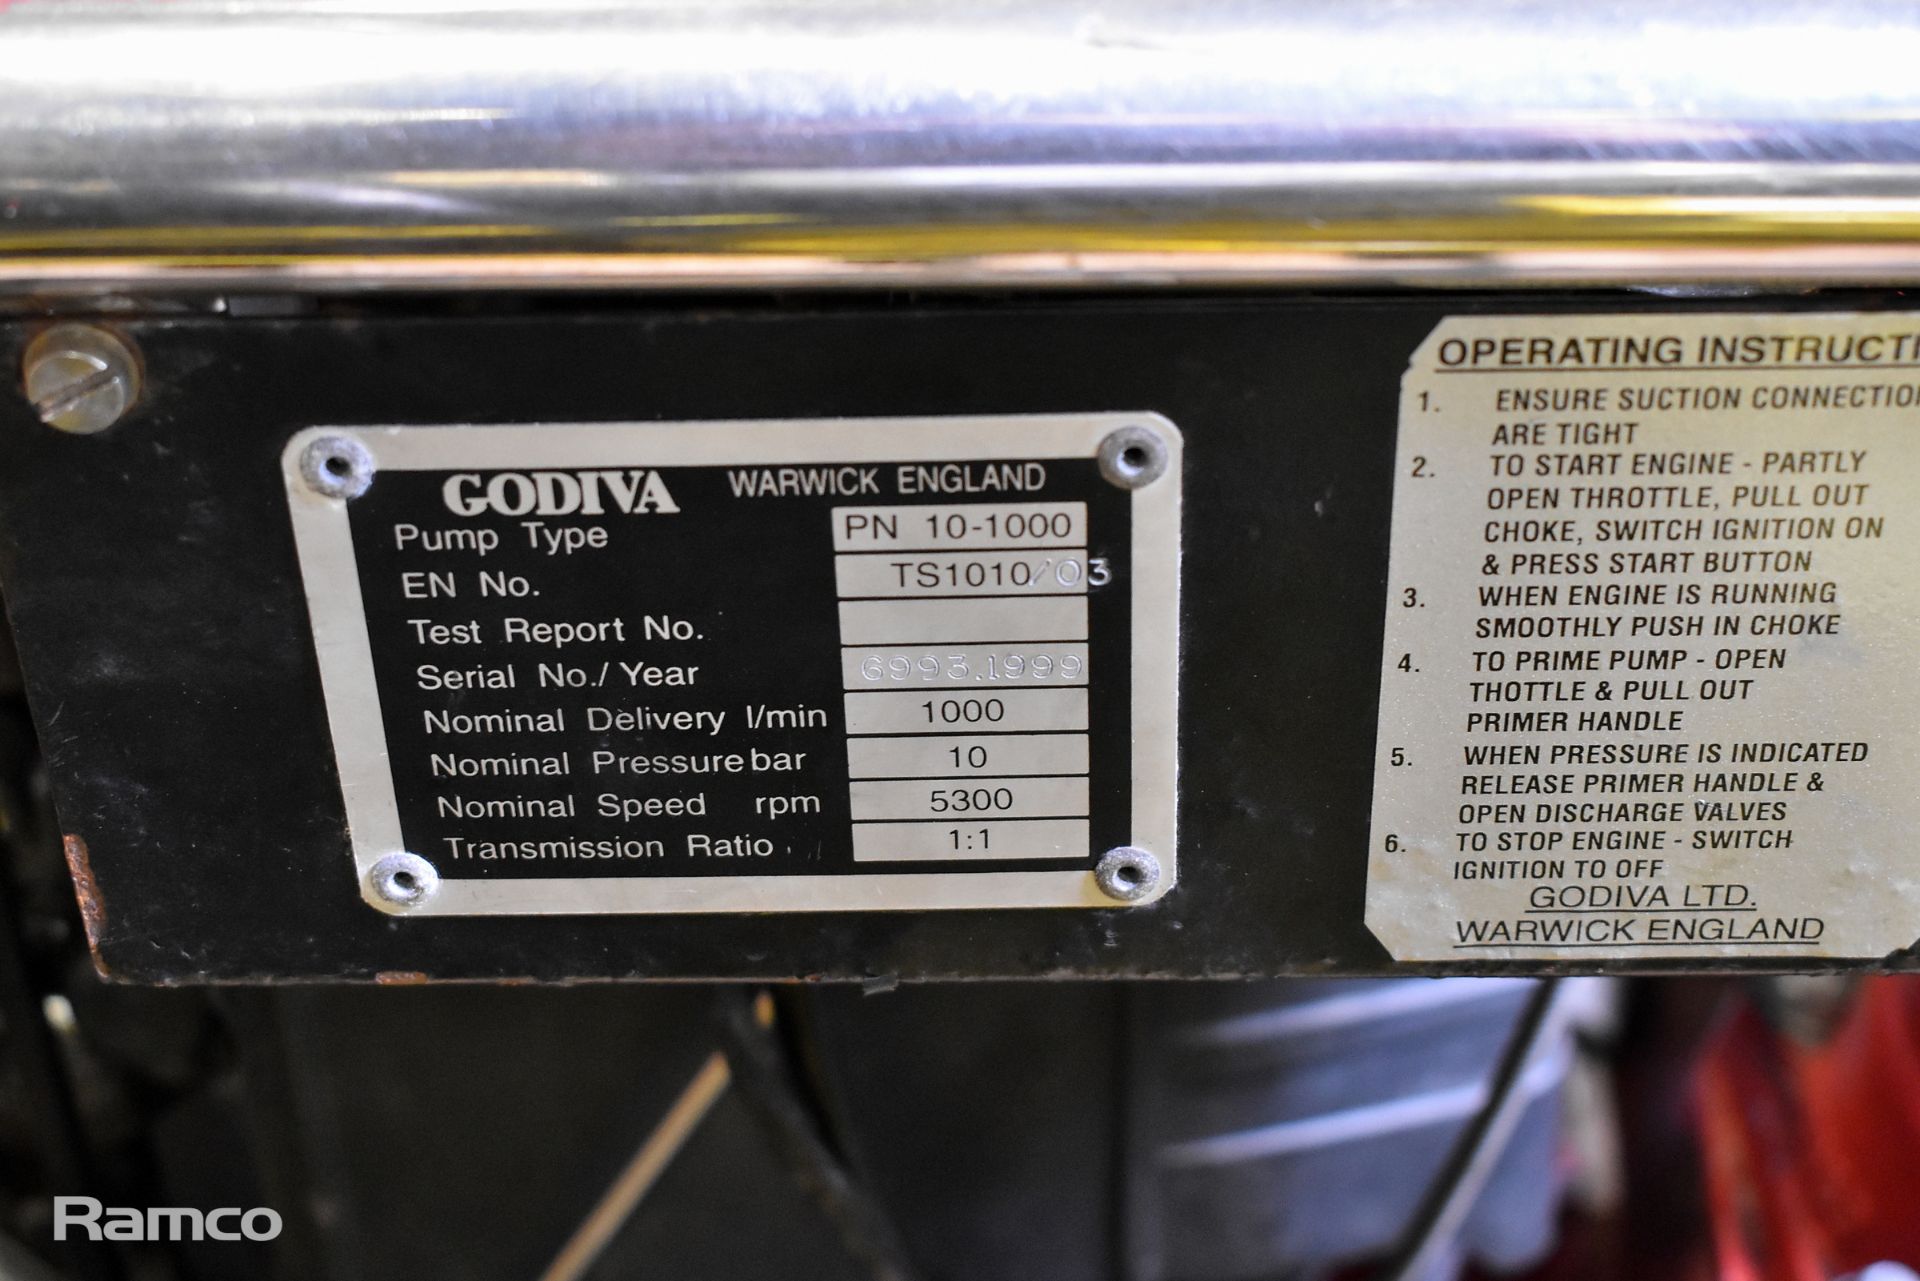 Godiva PN 10-1000 light portable pump - 1999 model - serial number 6993 - 5300 rpm nominal speed - Image 5 of 8